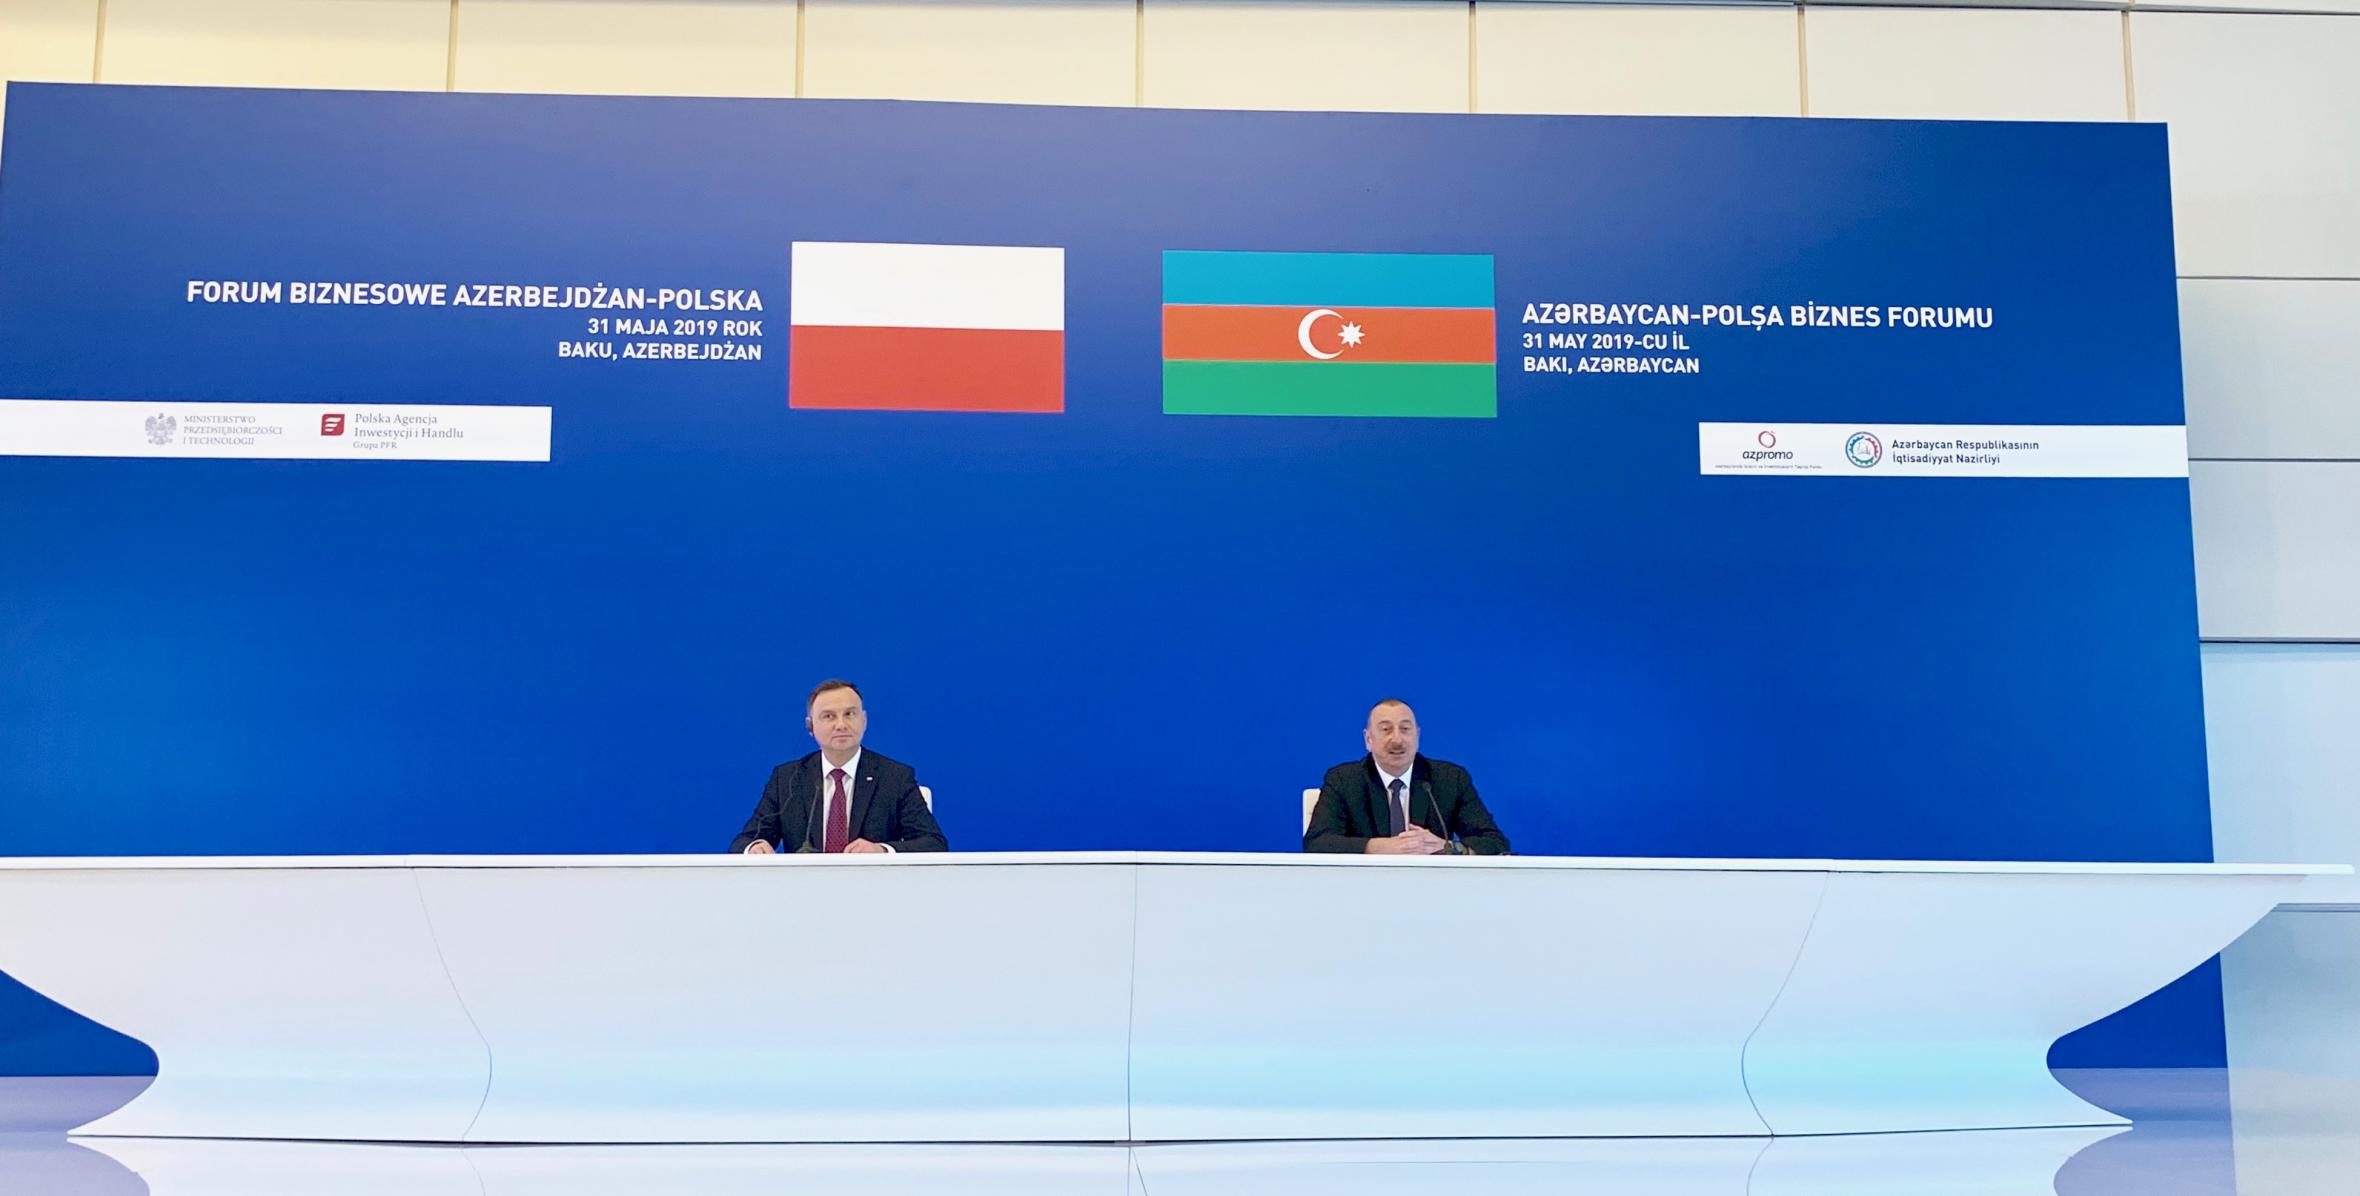 Azerbaijan-Poland business forum held in Baku